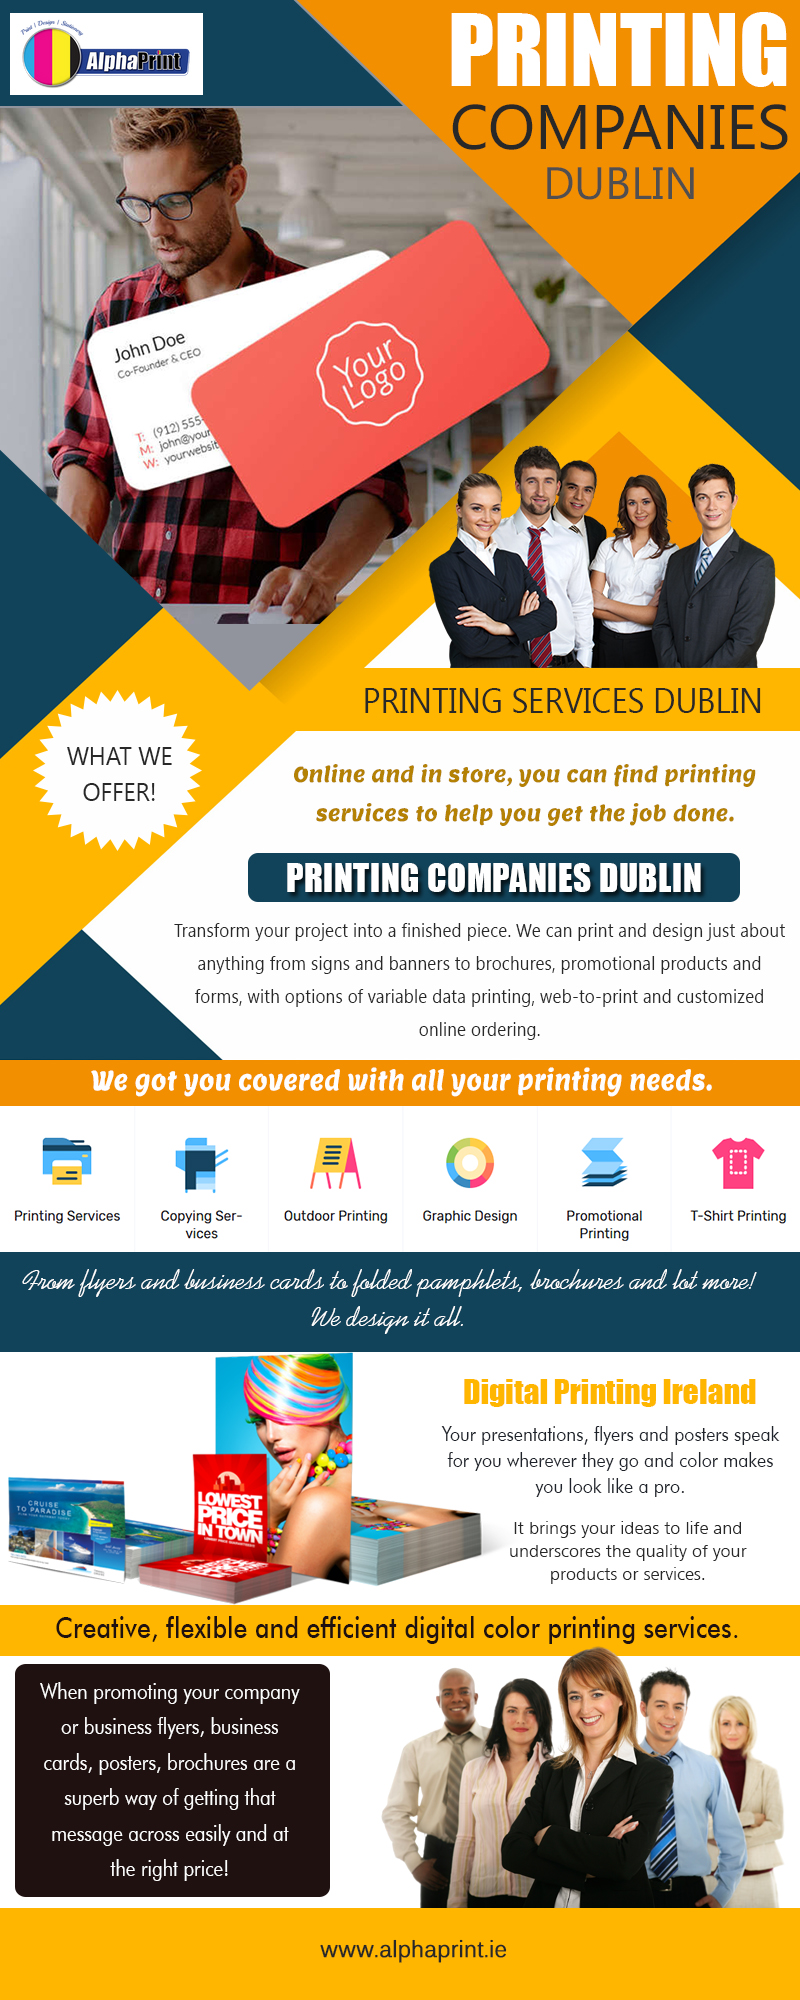 Printing Company Dublin | Call – 01 426 4844 | alphaprint.ie